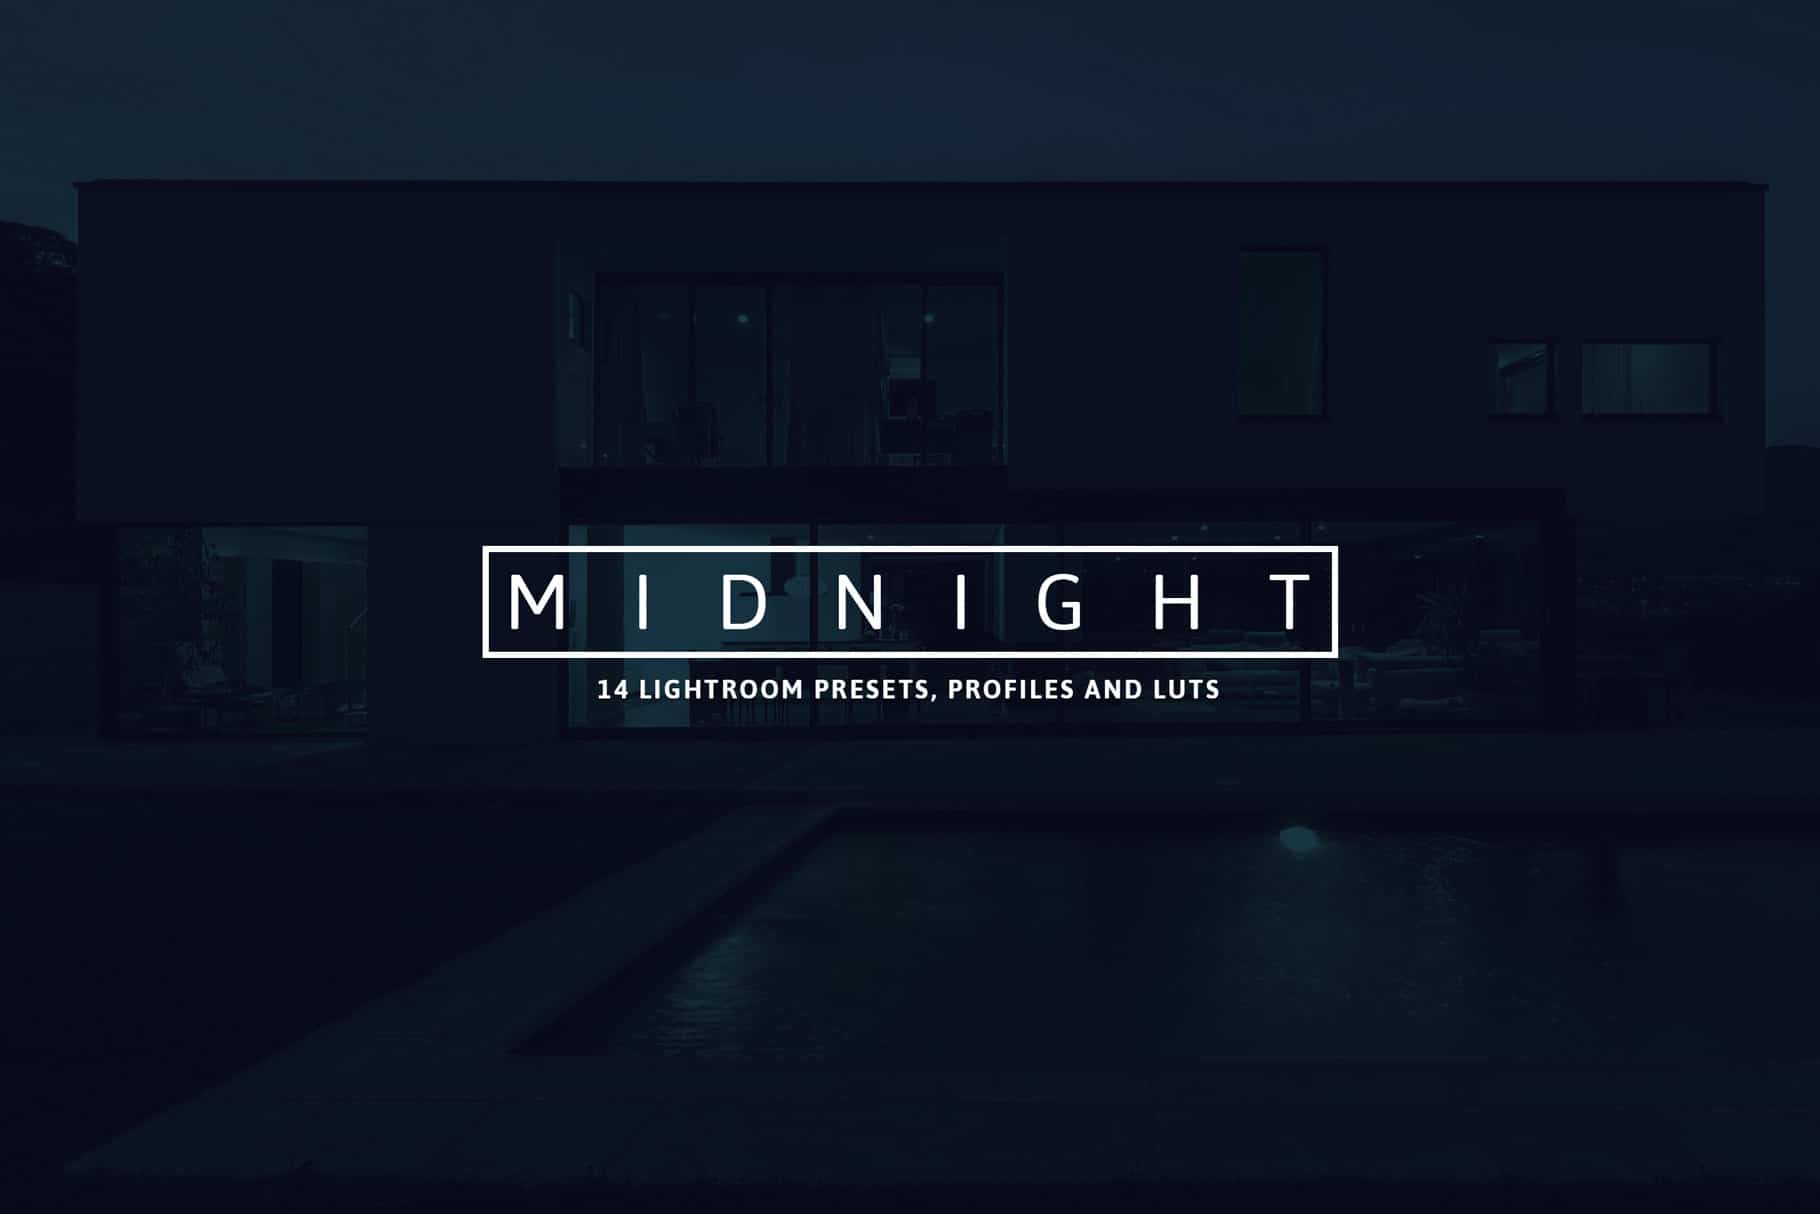 3 Midnight Lightroom Presets and Profiles